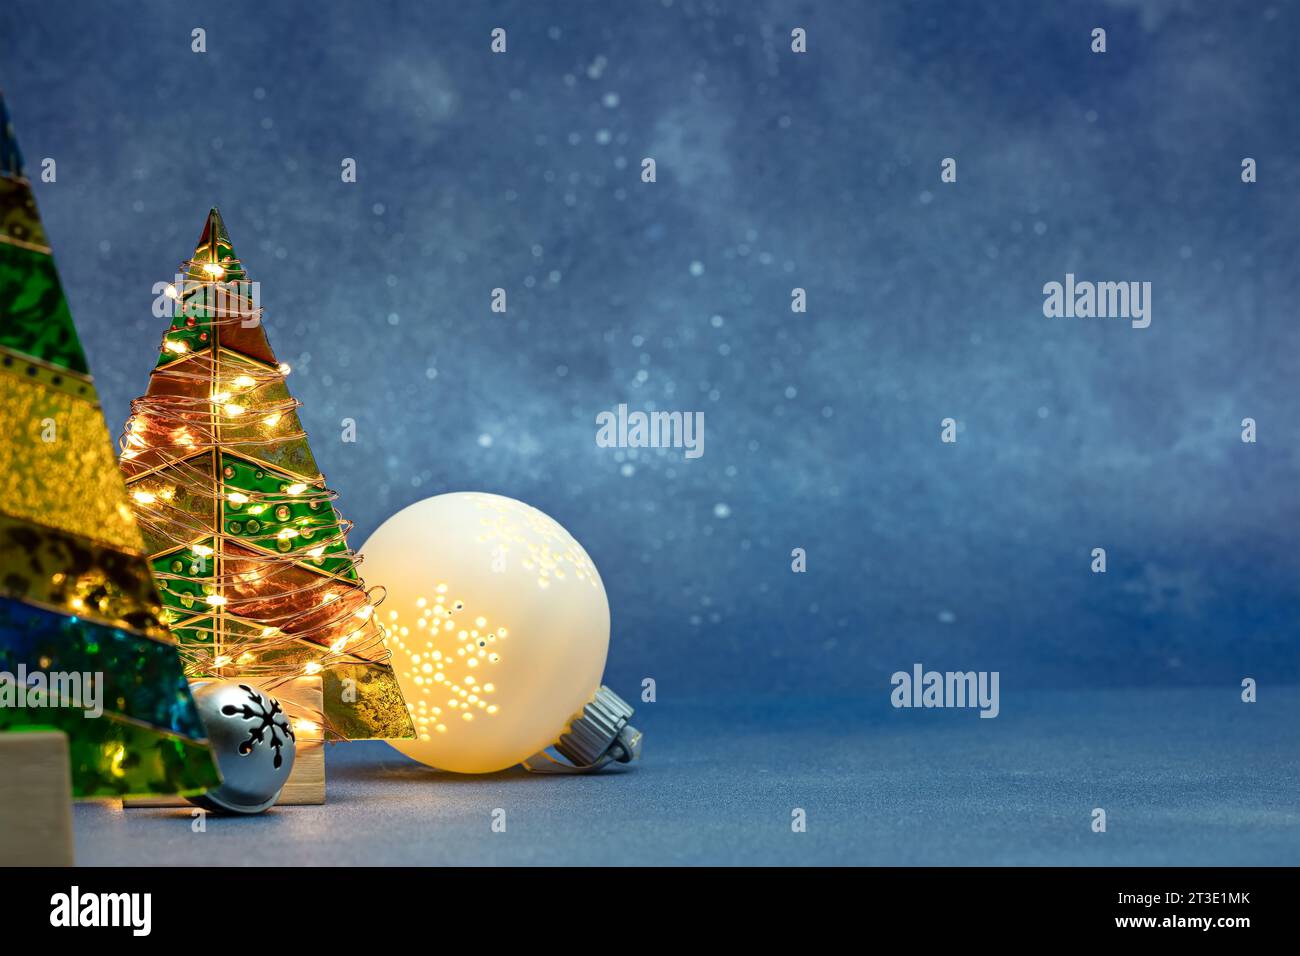 new year festive decorations on blue blurred background with illuminated christmas tree. Stock Photo